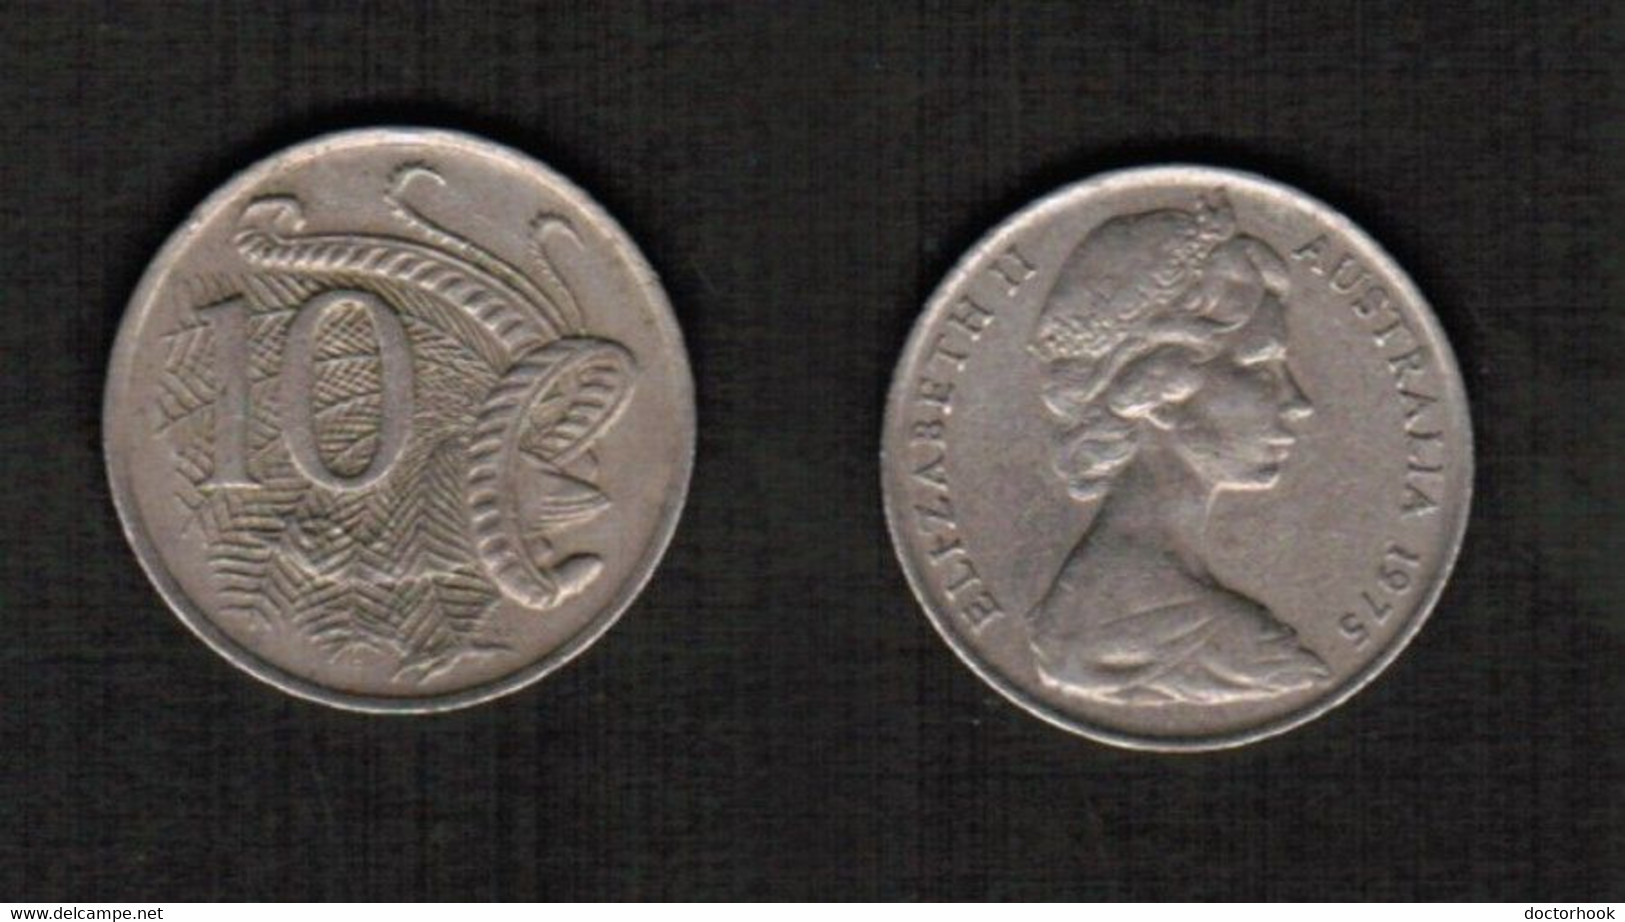 AUSTRALIA  10 CENTS 1975 (KM # 65) #6391 - 10 Cents